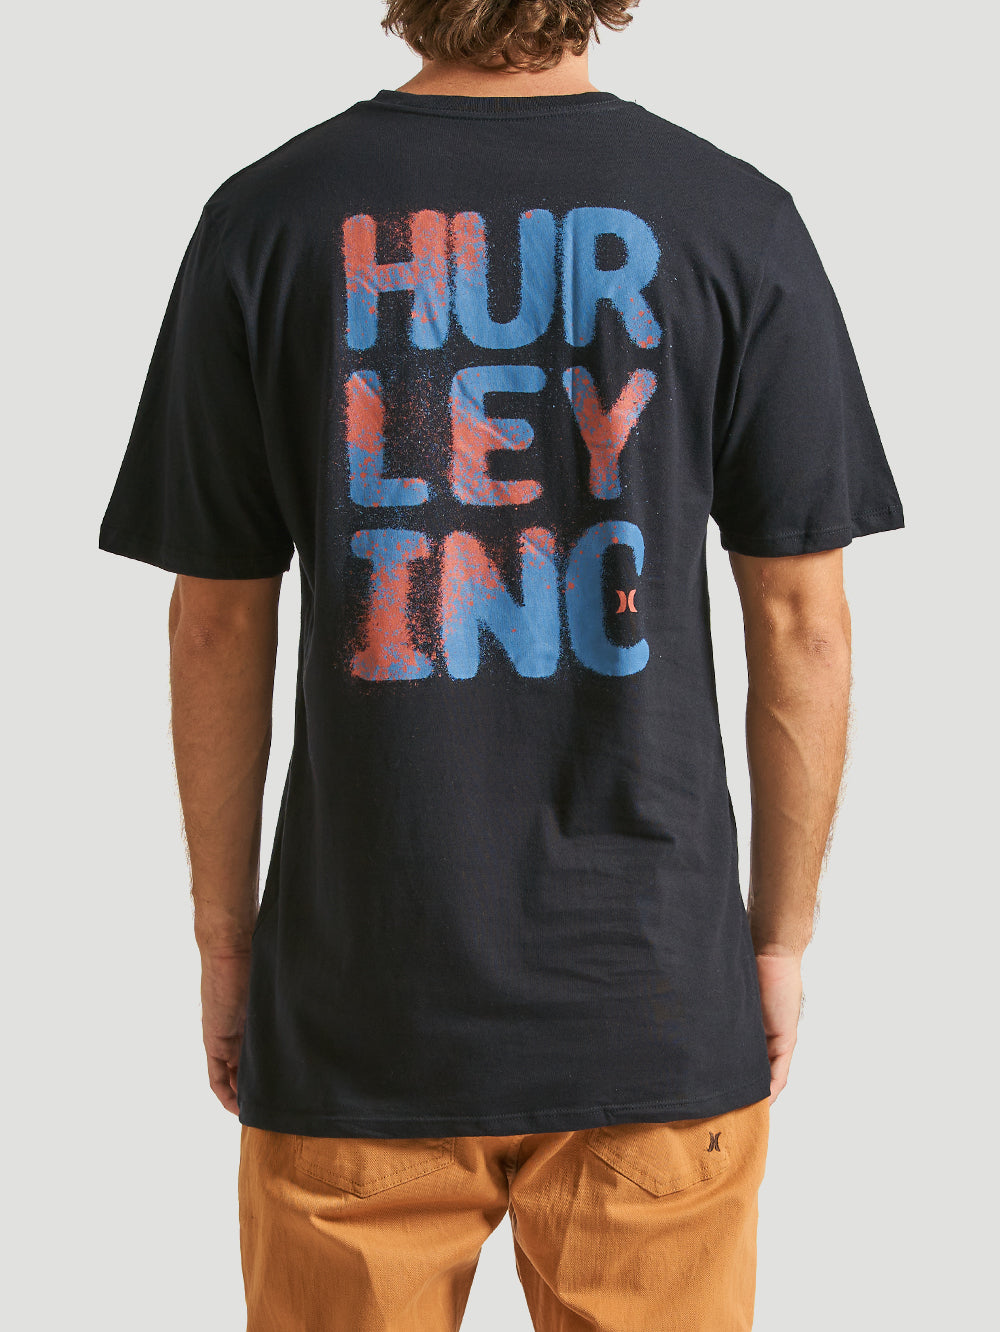 Camiseta Hurley Noise Preto